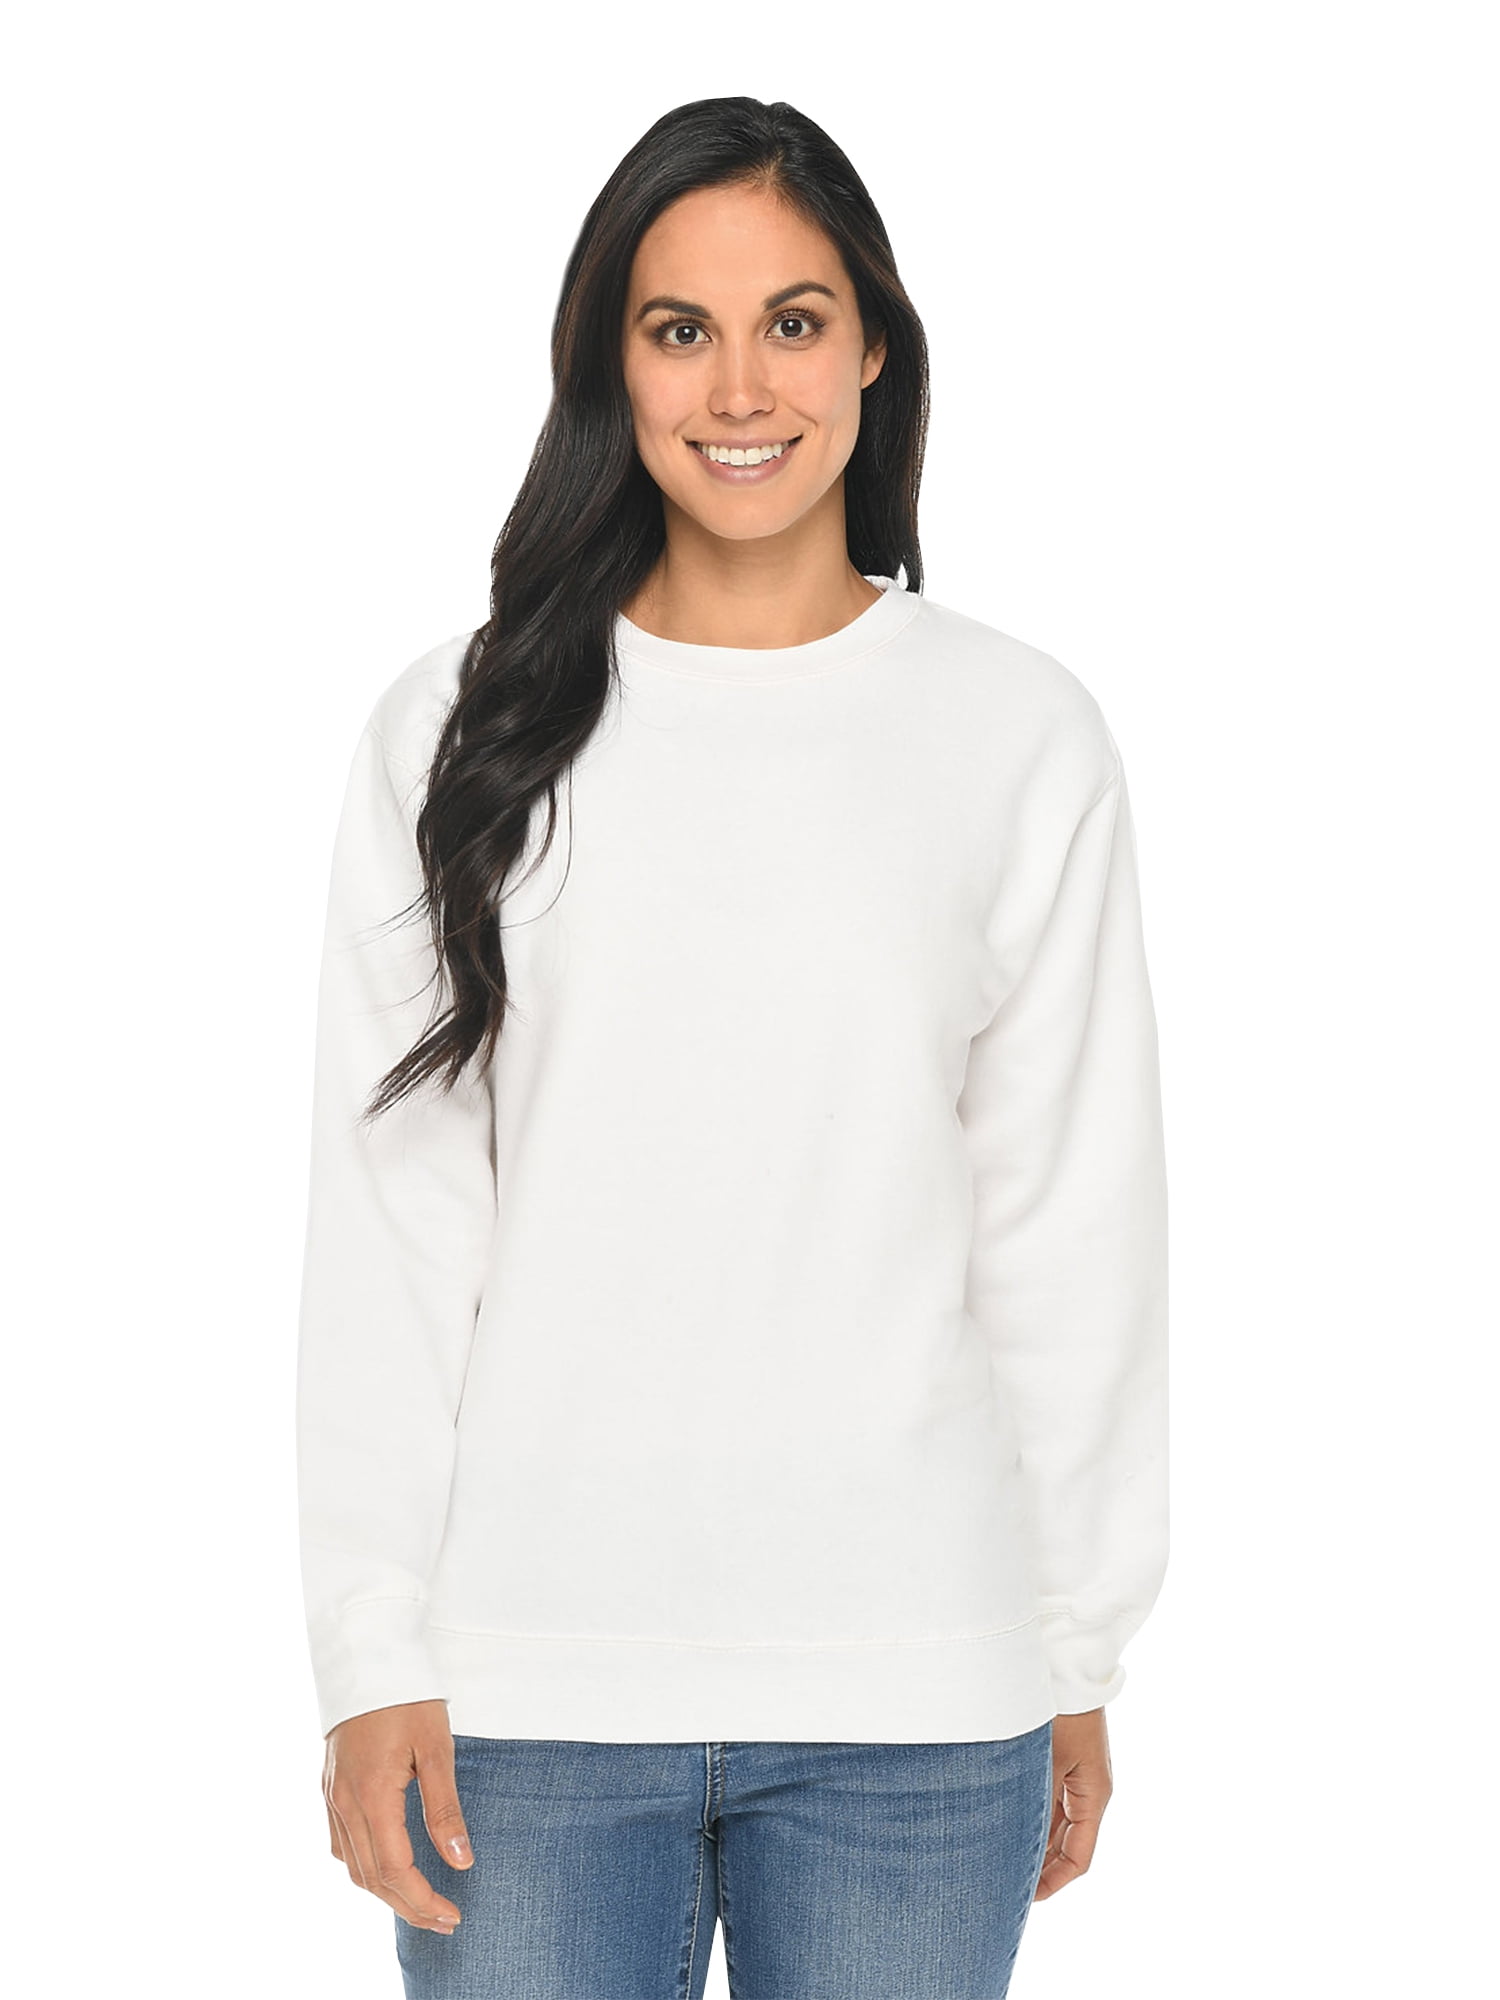 Unisex Sweatshirts for Women Men Sweatshirt Casual Plain Uniform Long  Sleeve White Sweaters for Men and Women